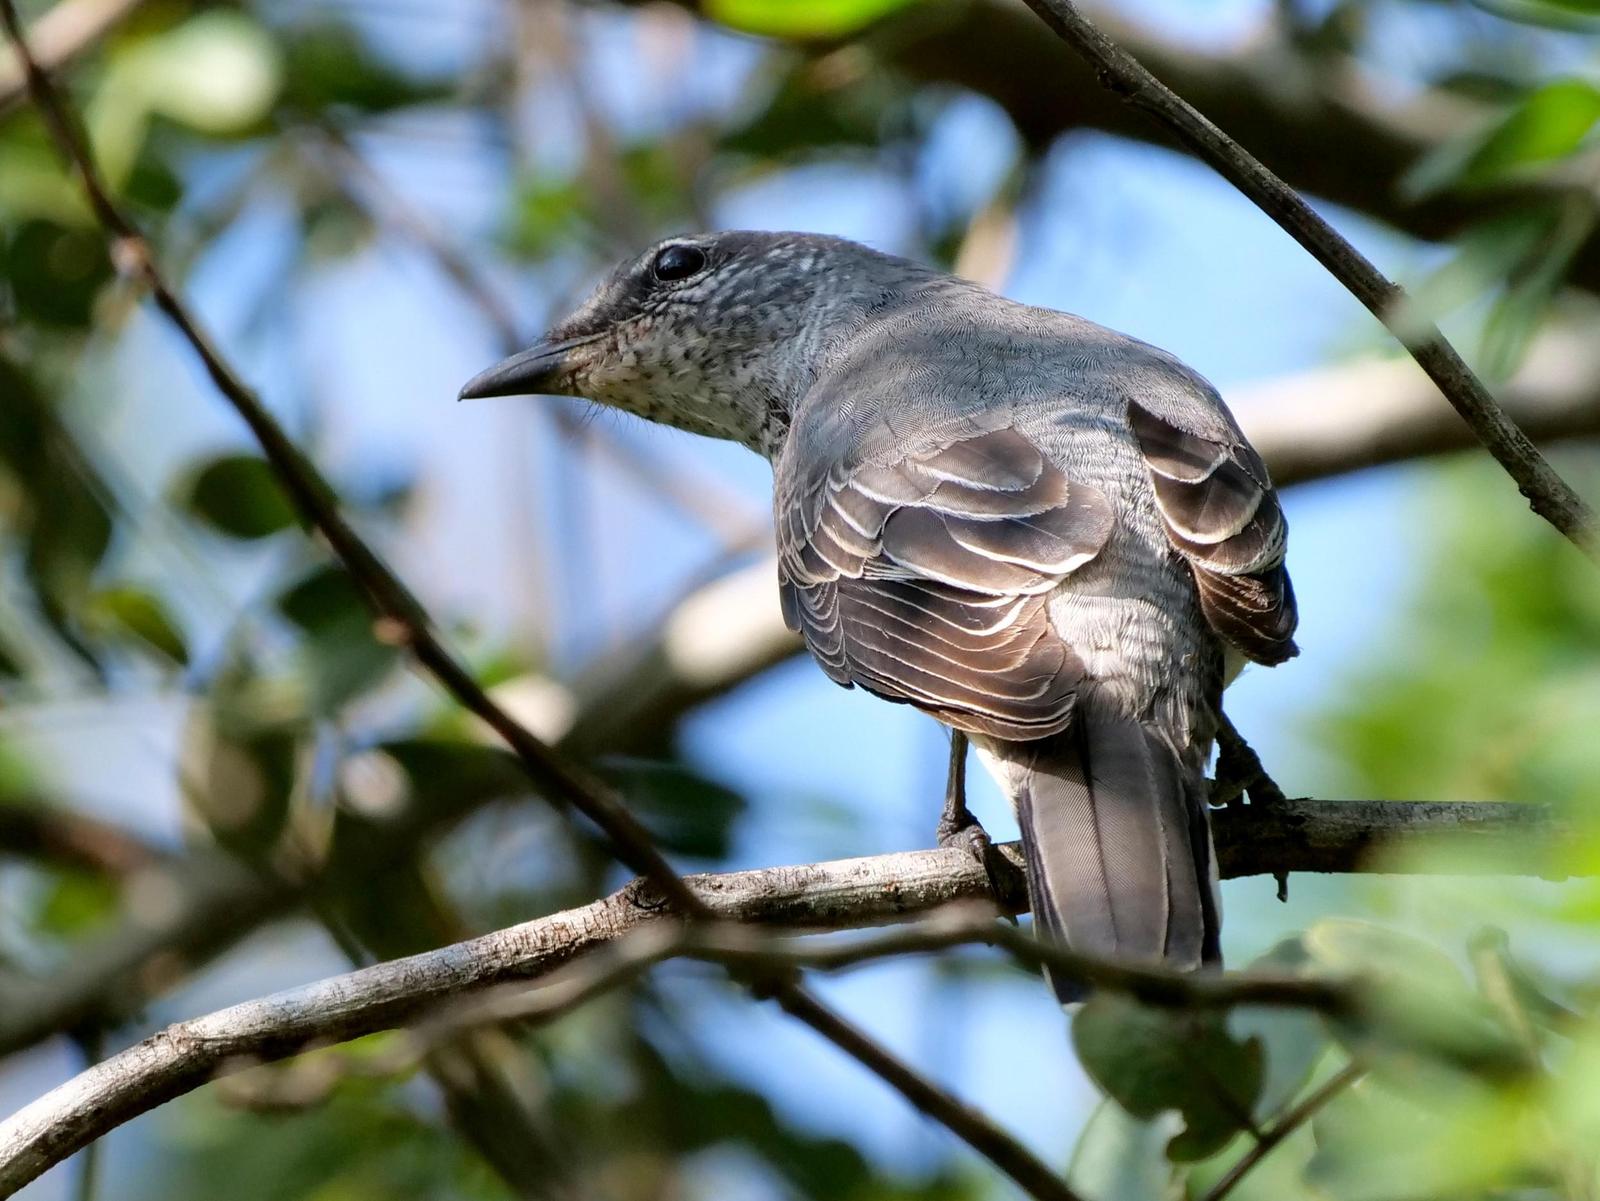 Black-headed Cuckooshrike Photo by Peter Edmonds